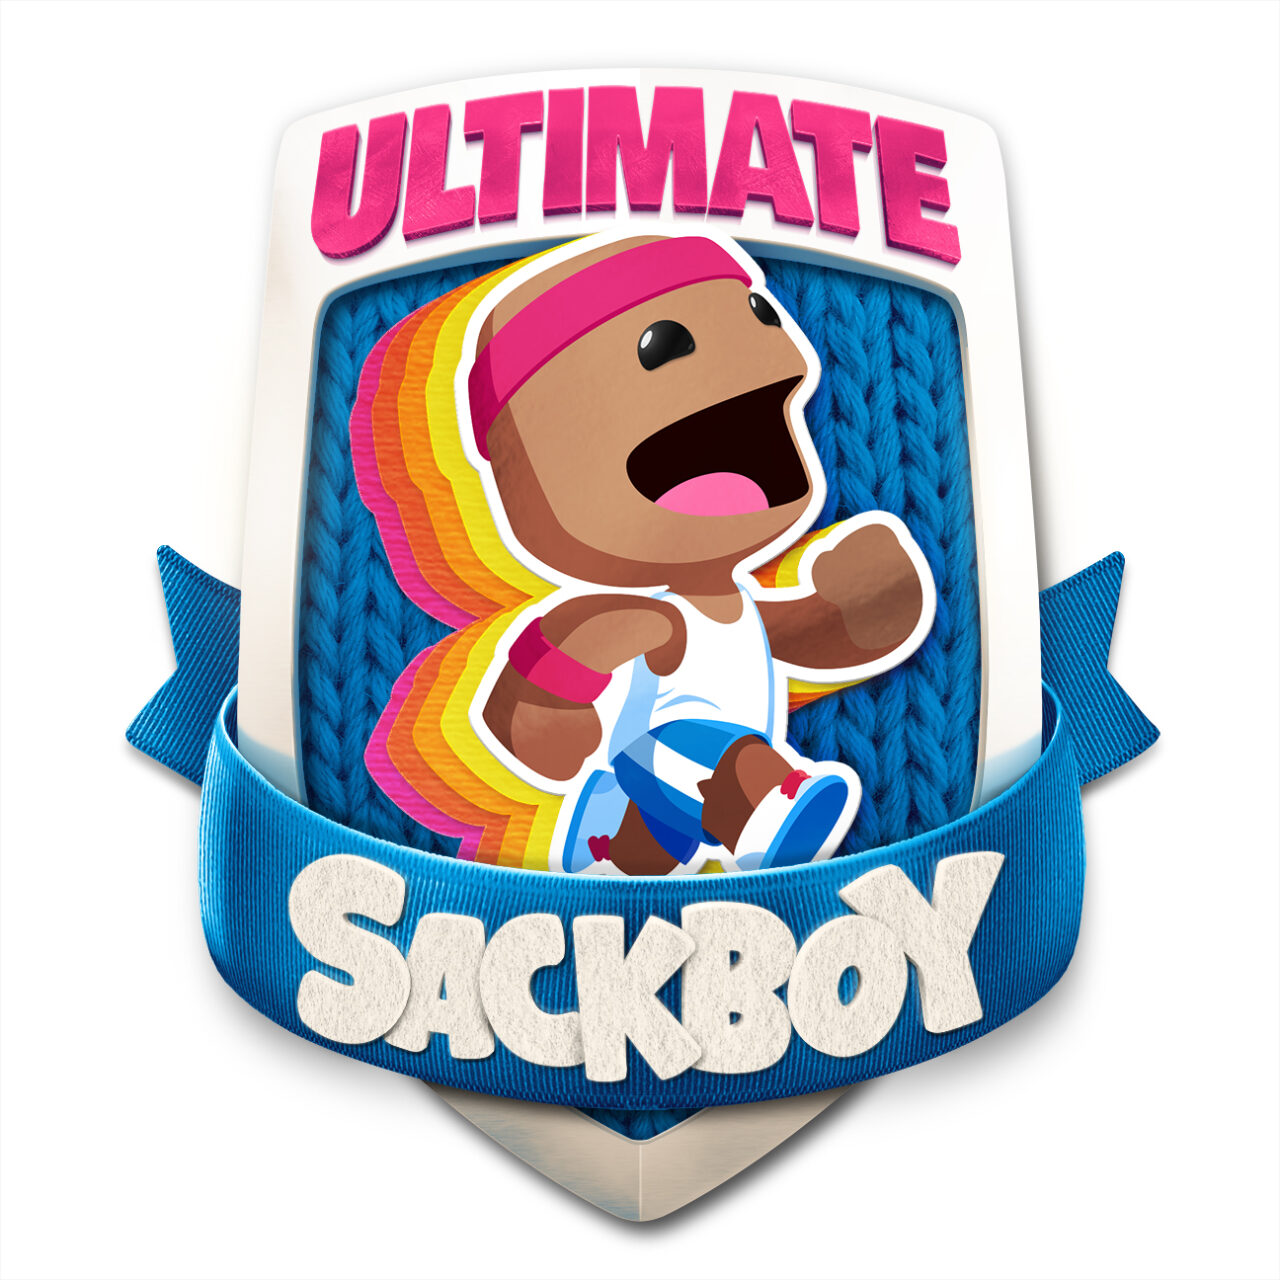 Ultimate Sackboy screencap (Exient)